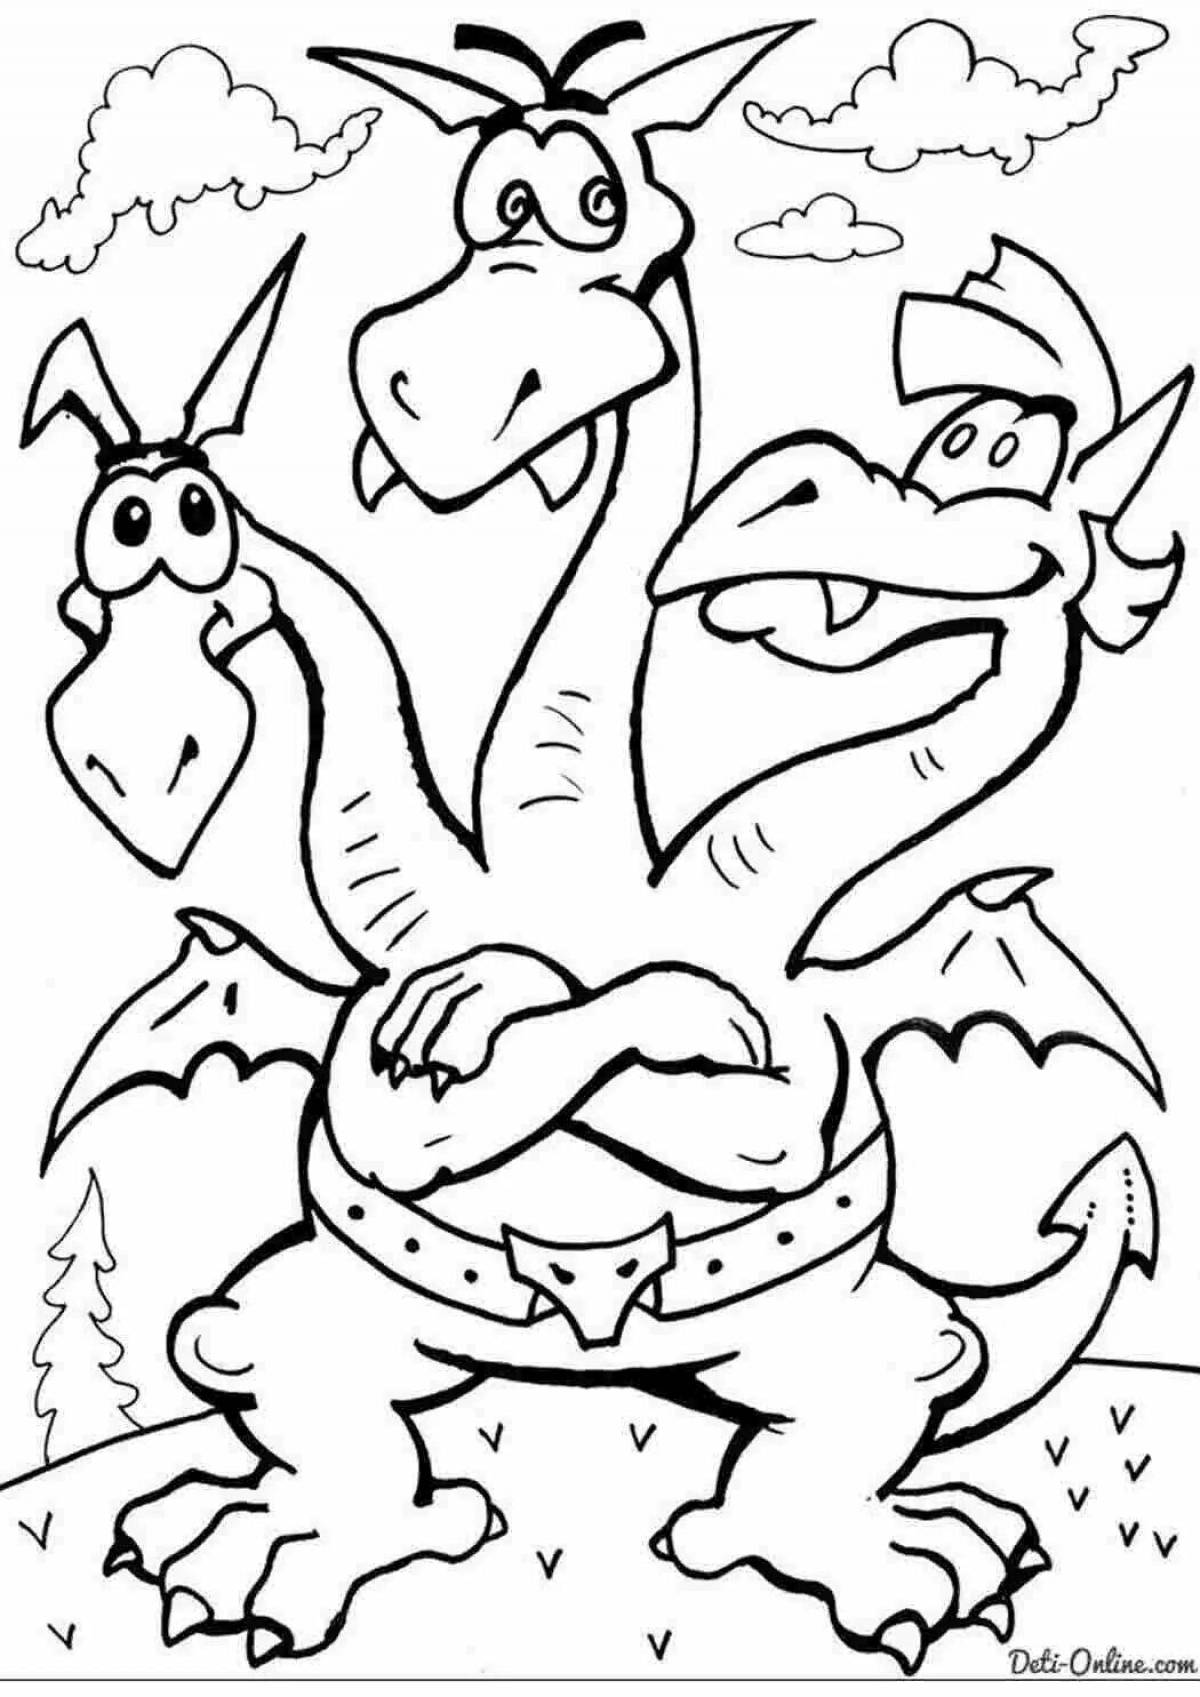 Impressive three-headed dragon coloring page